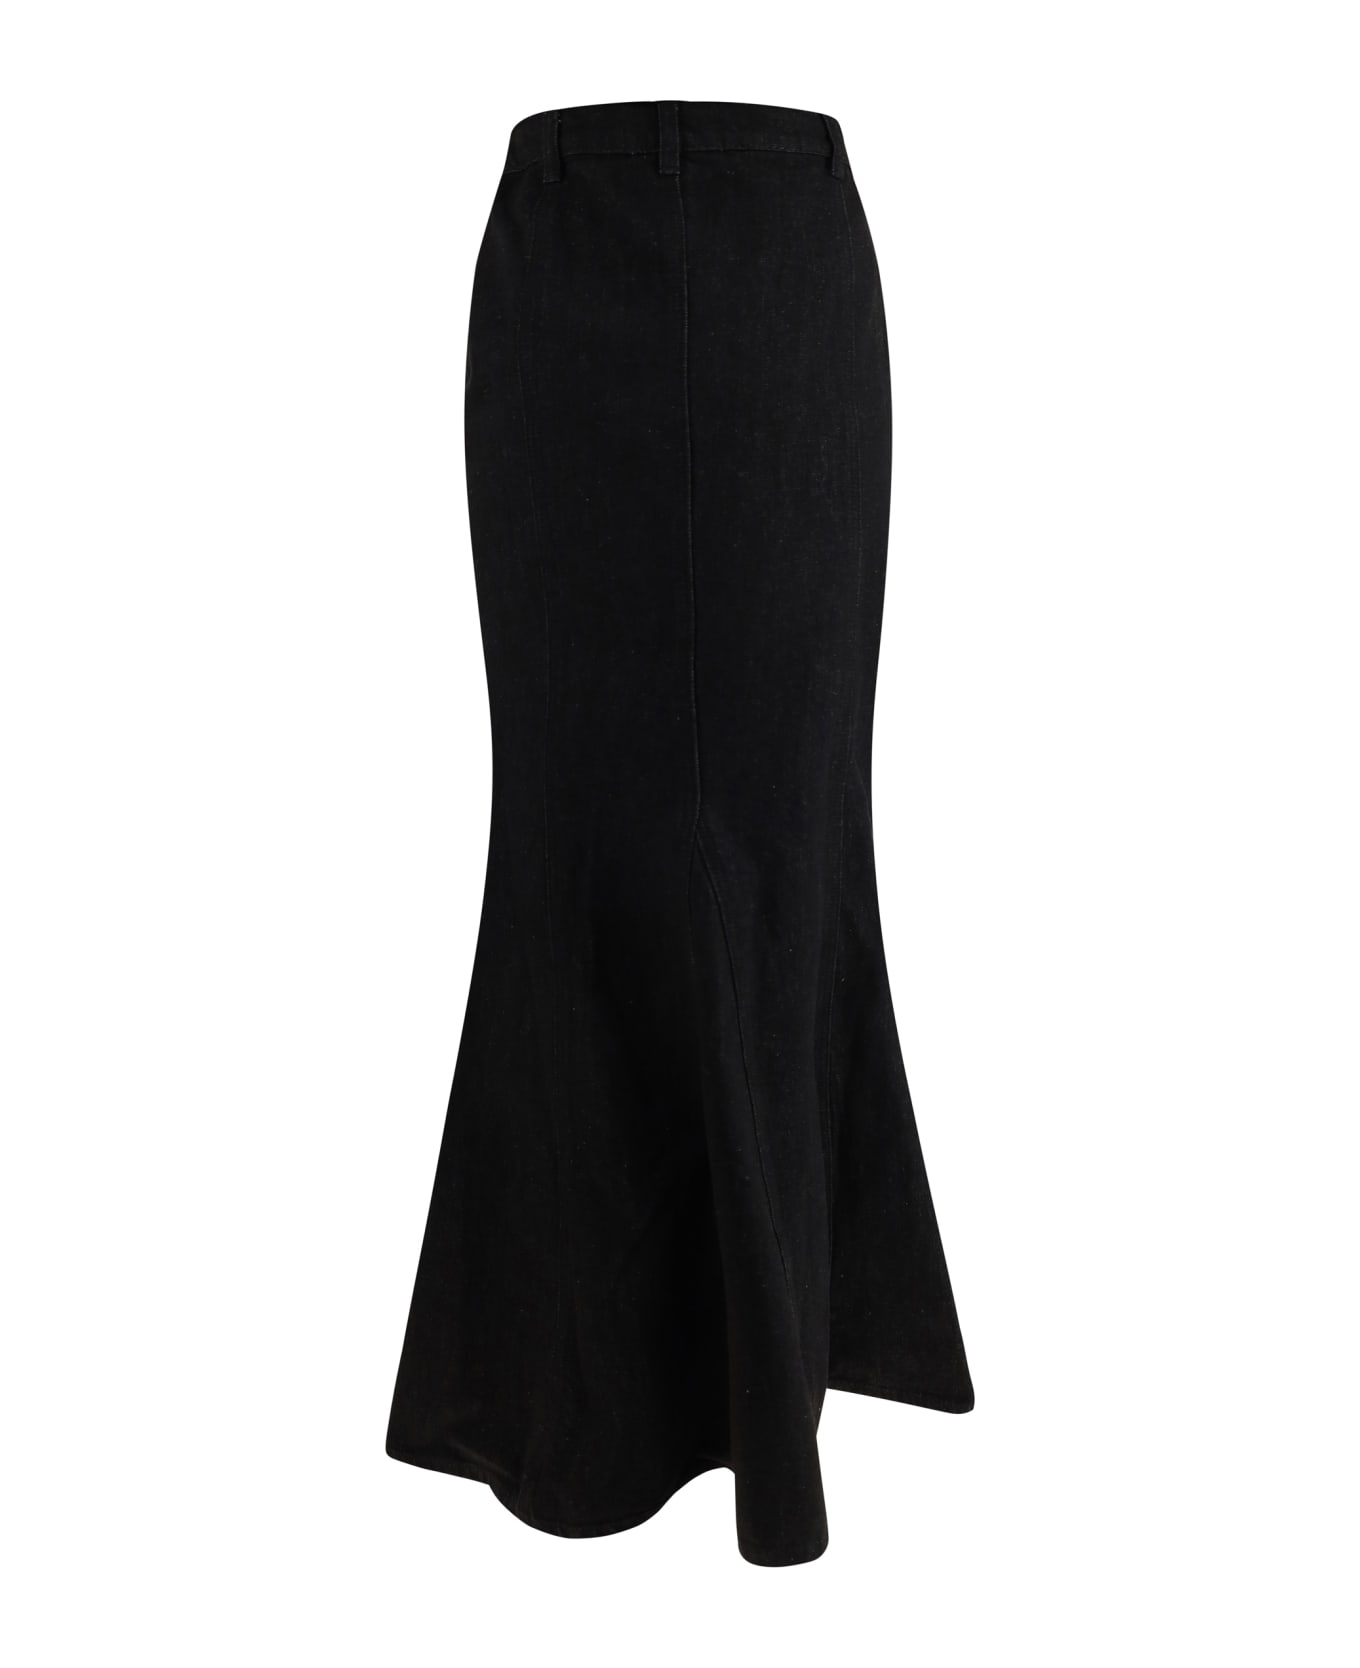 self-portrait Denim Skirt - Black スカート